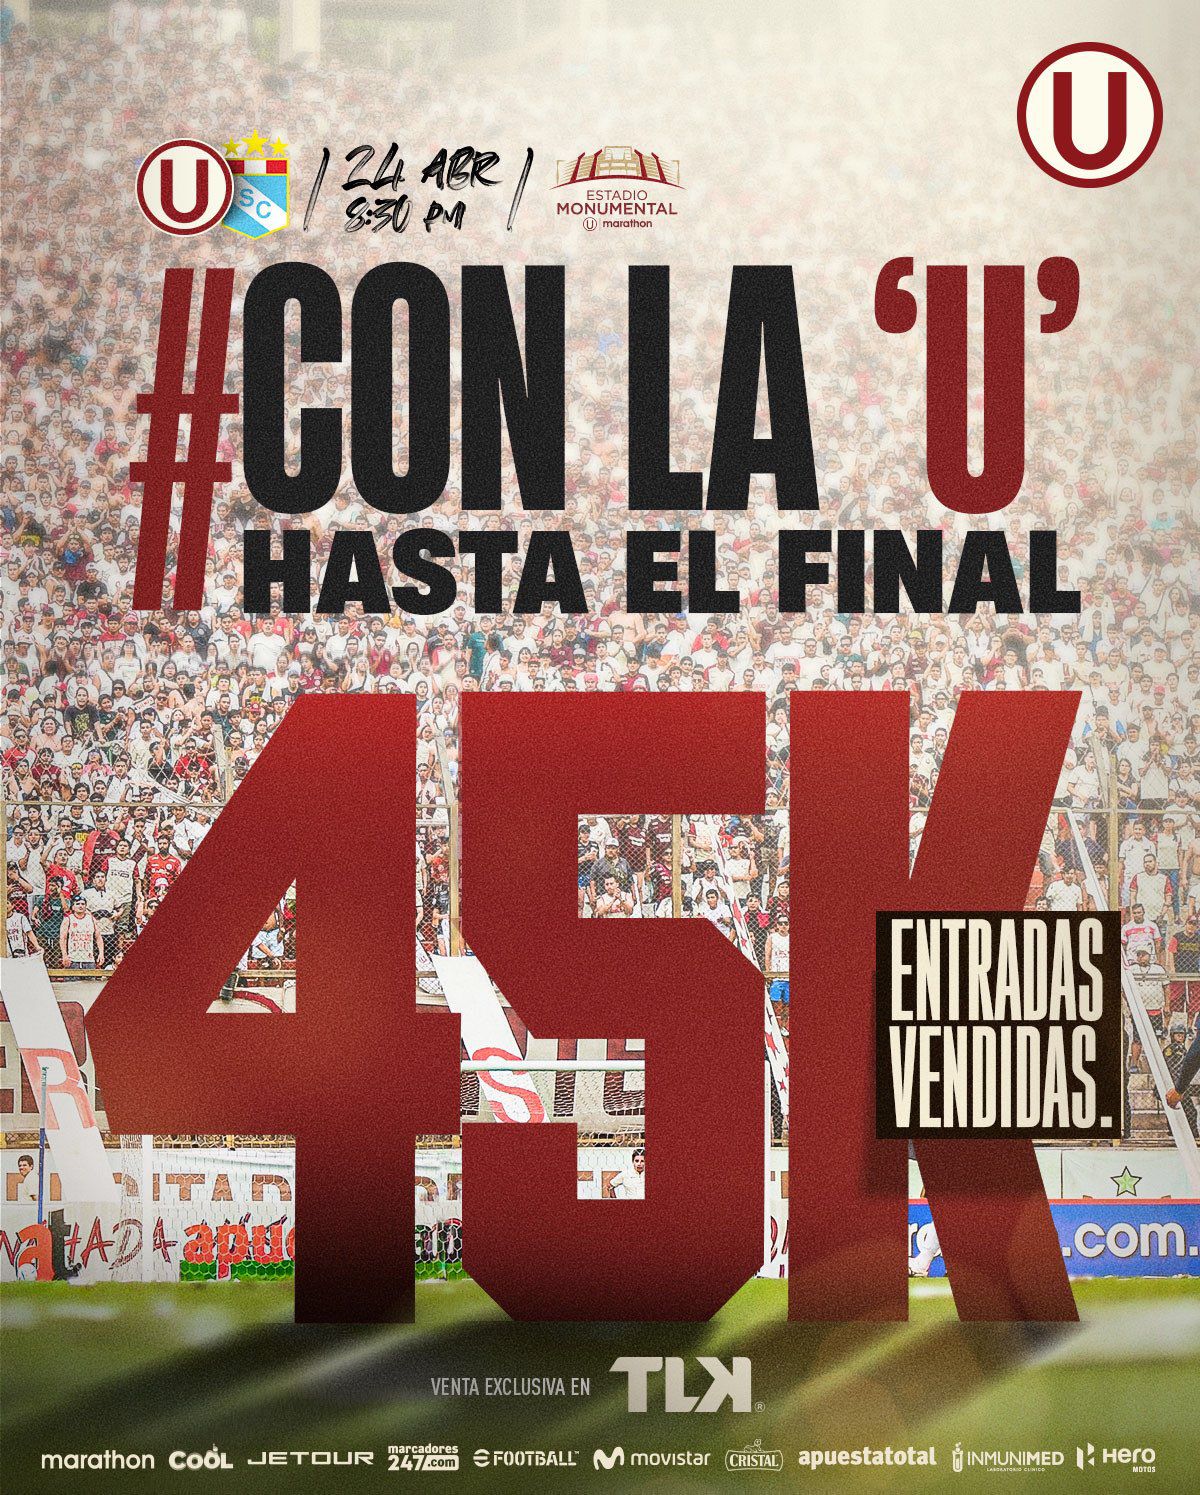 45 thousand spectators for Universitario vs Cristal for League 1.